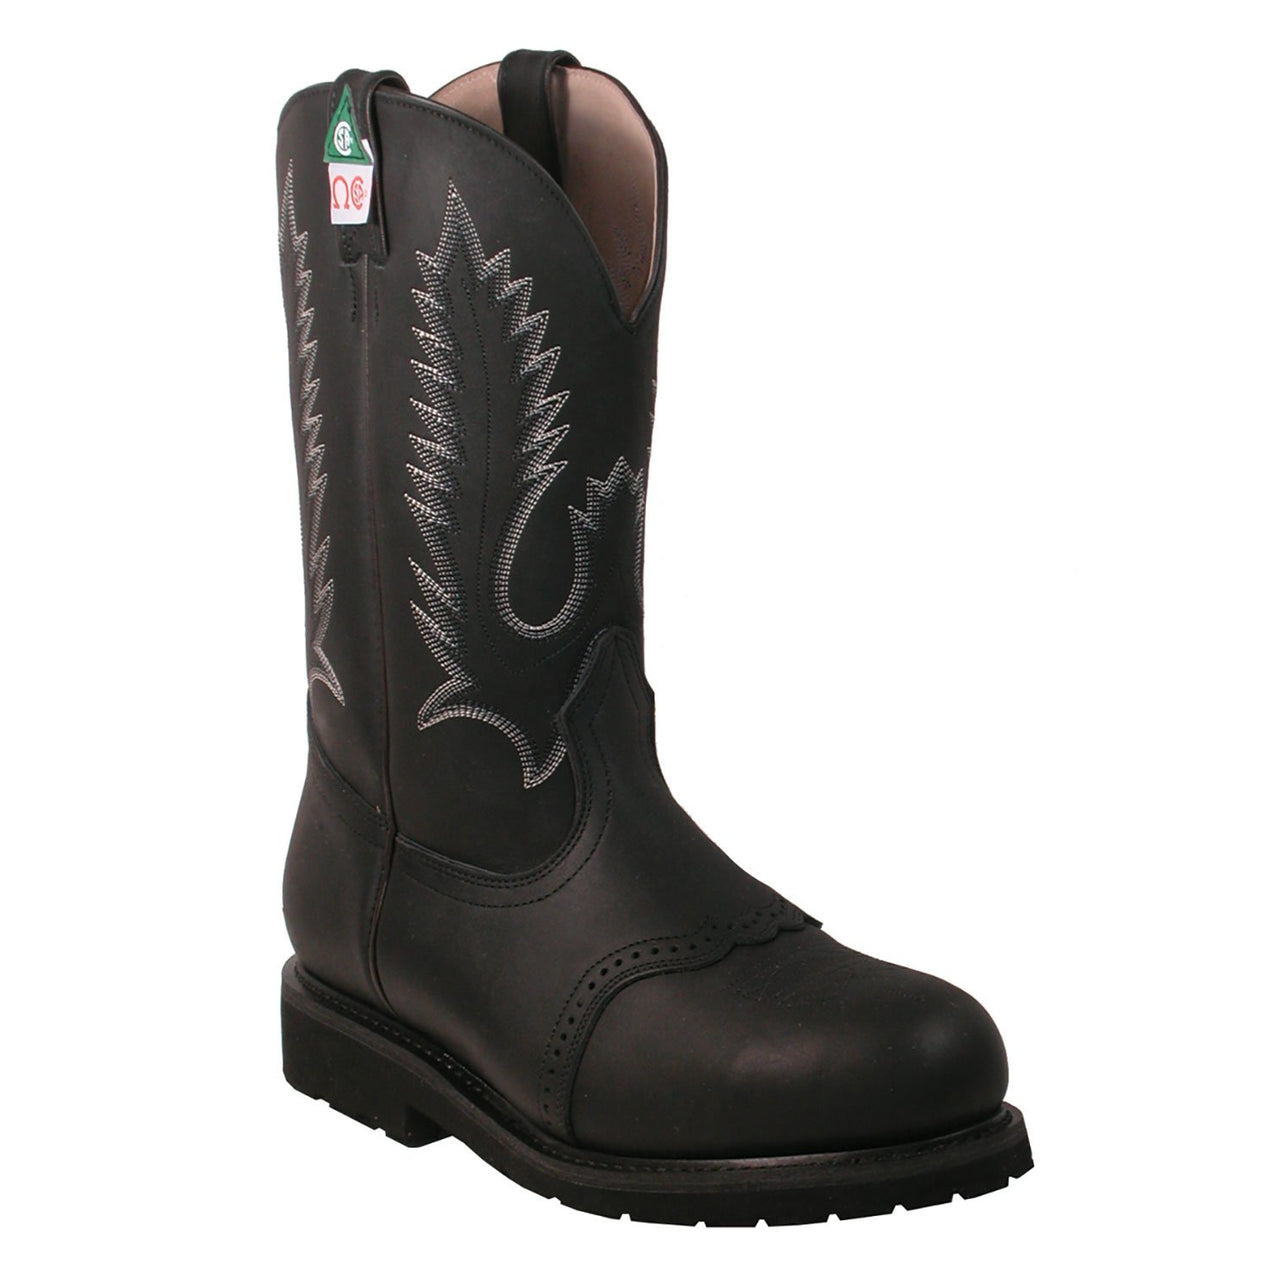 Boulet Men's Steel Toe Work Boots - Everest Black